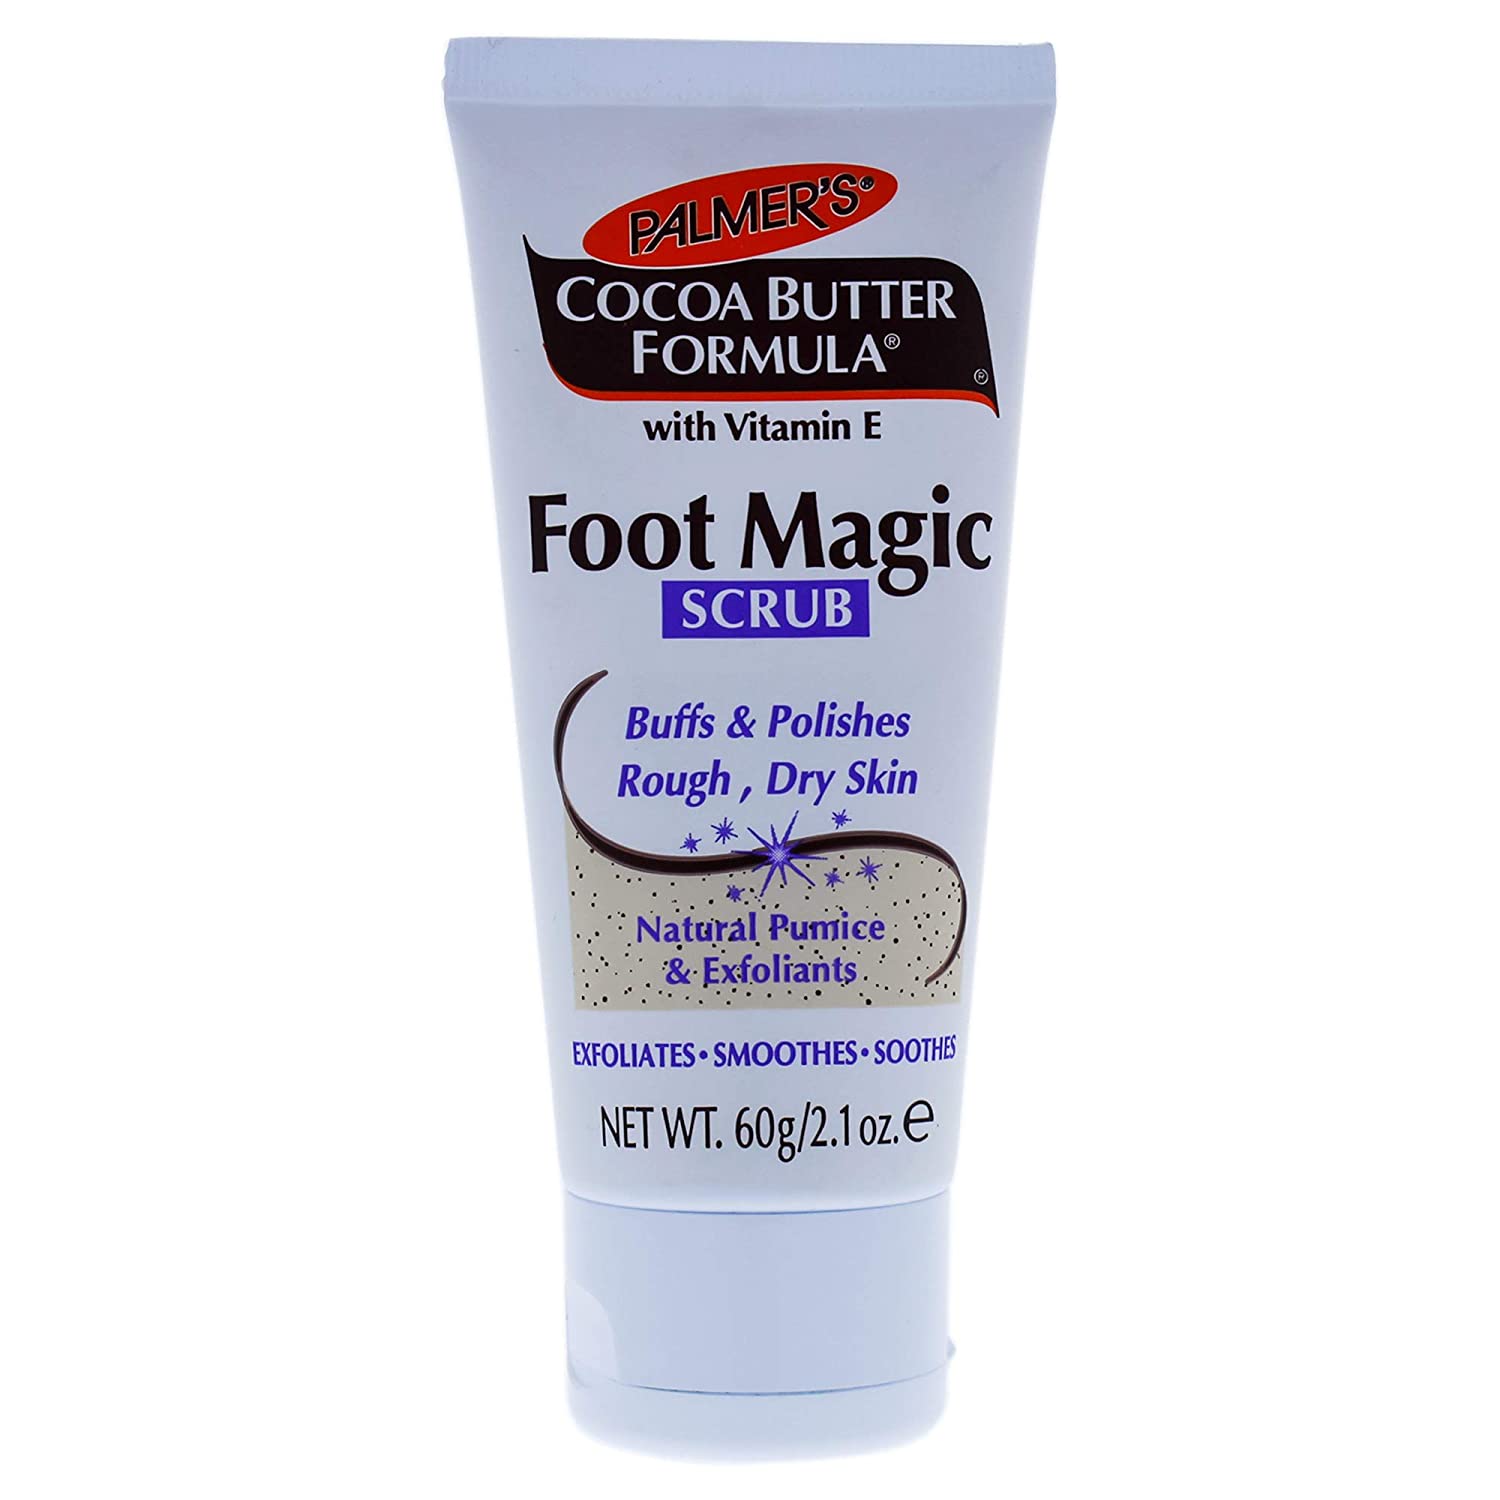 Palmer's Cocoa Butter Foot Magic Scrub - 60g